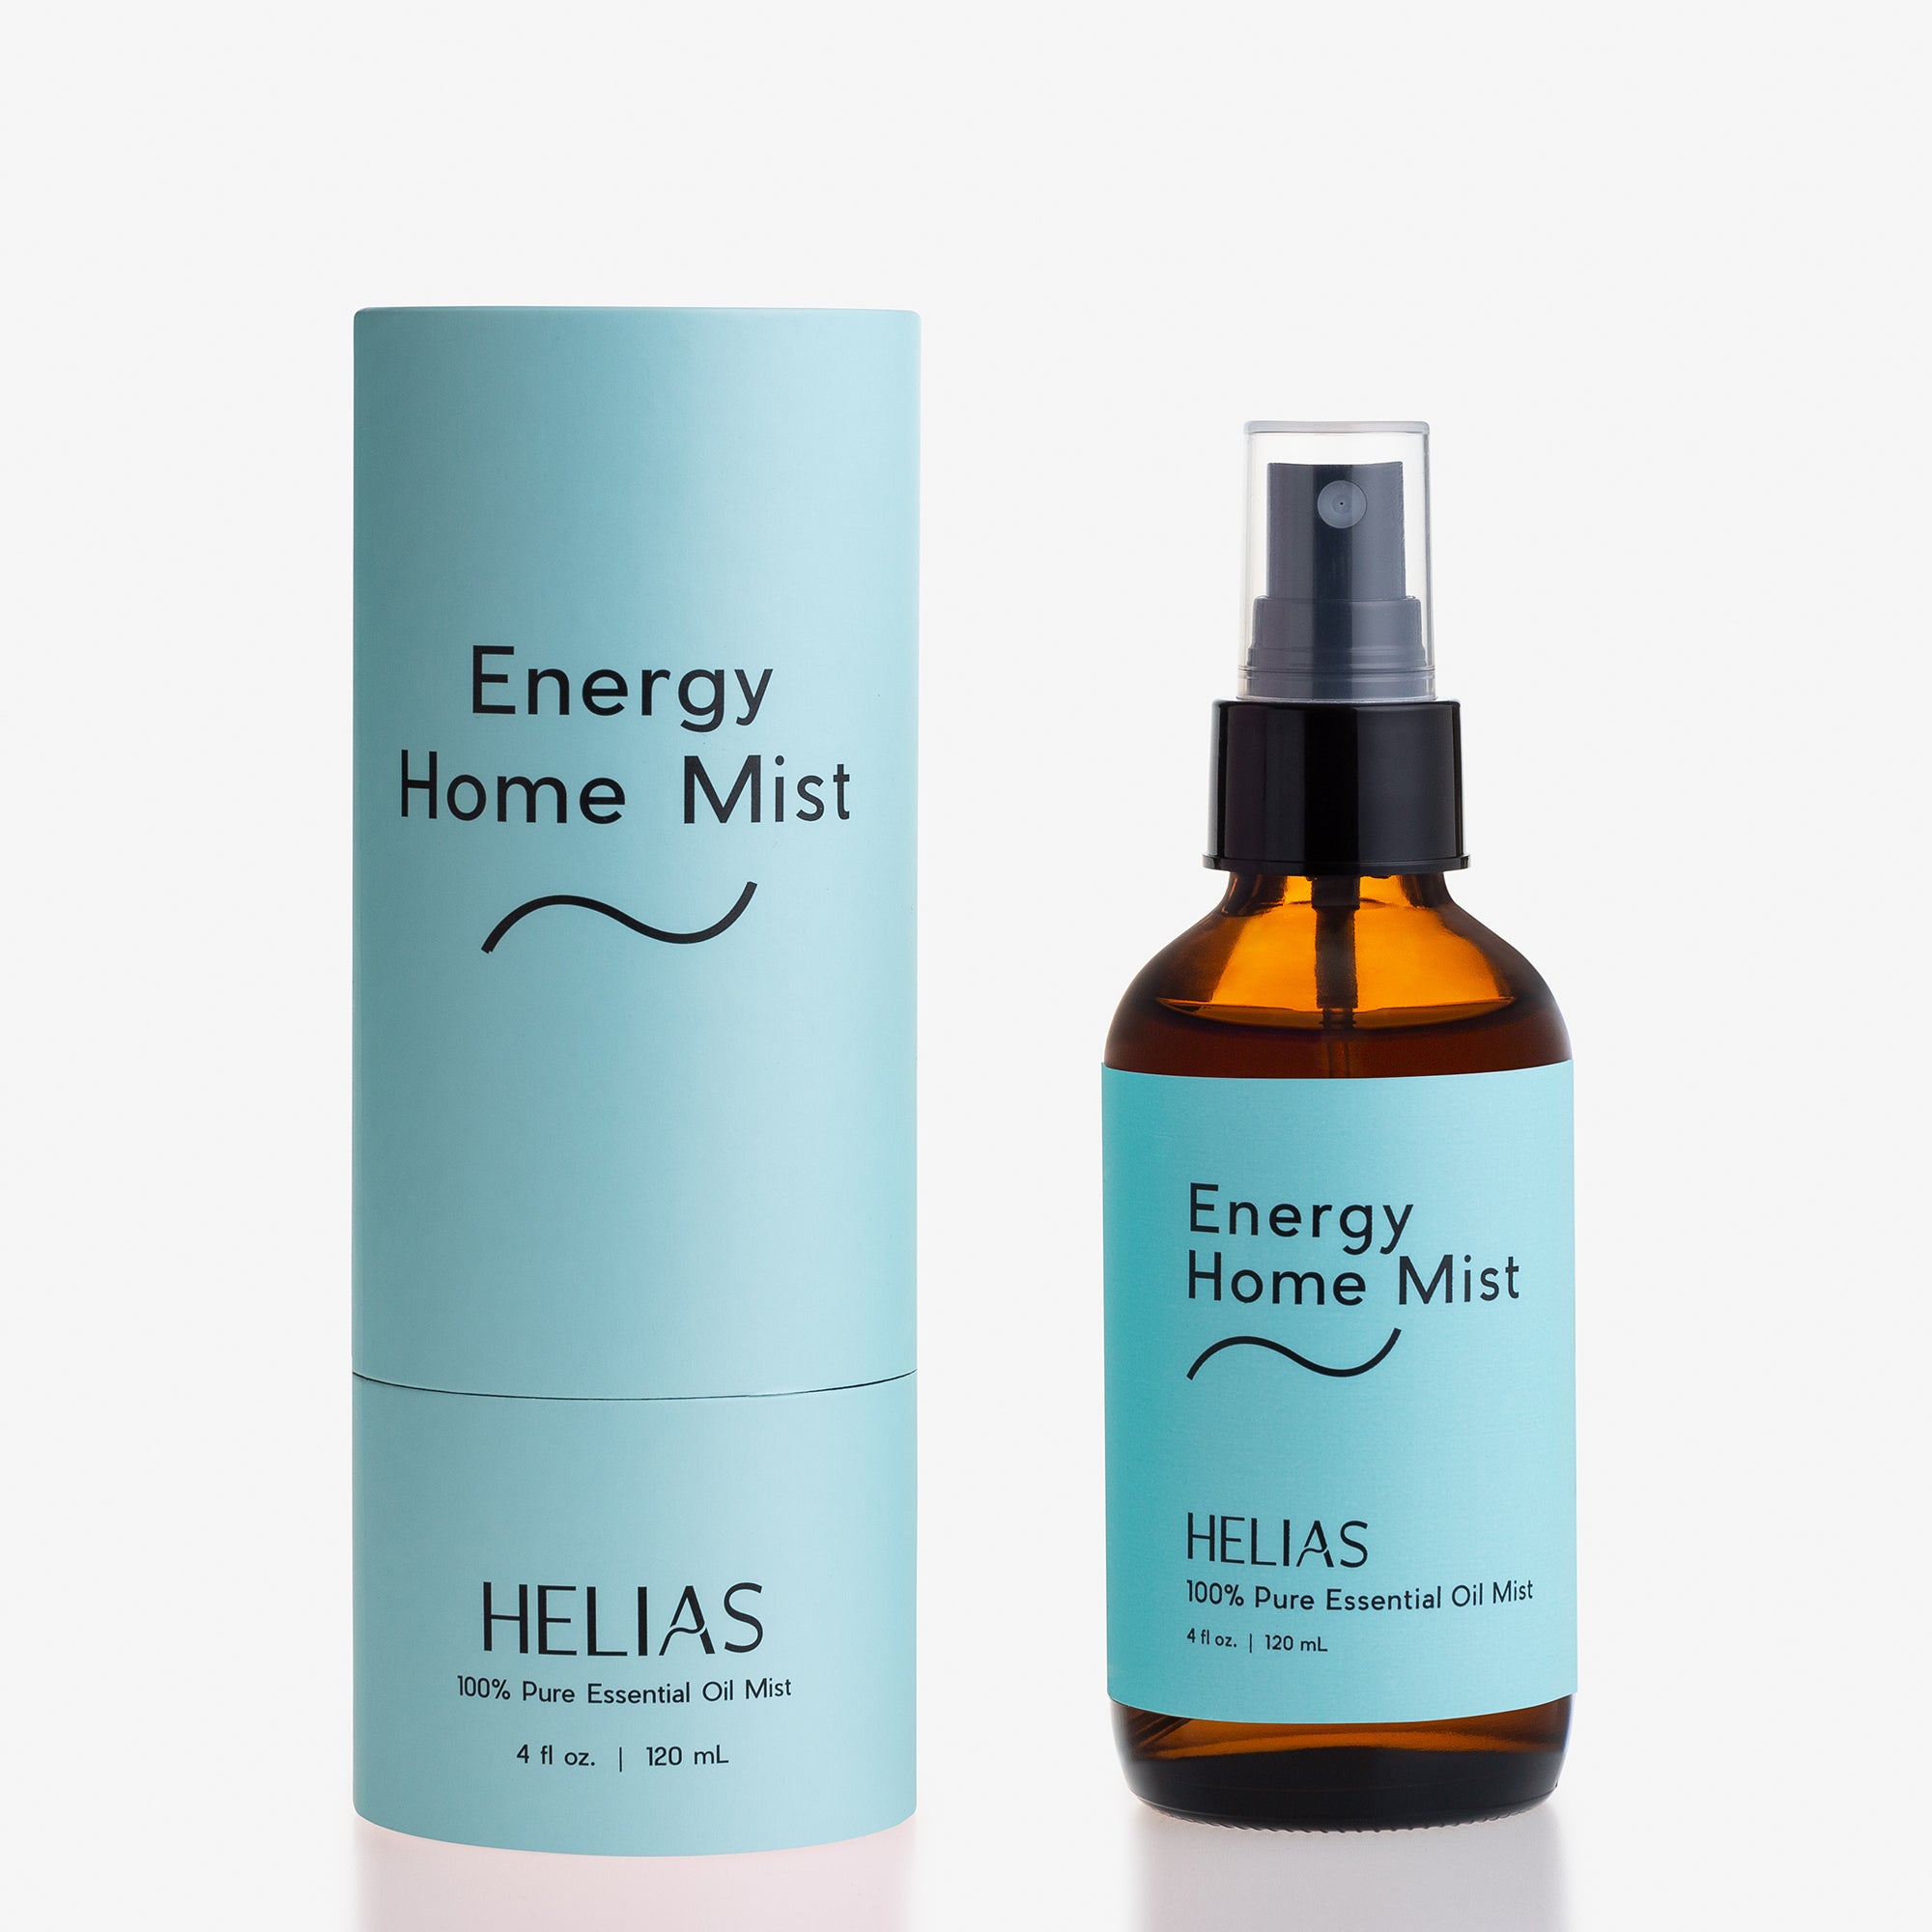 Energy Home Mist Helias Oils